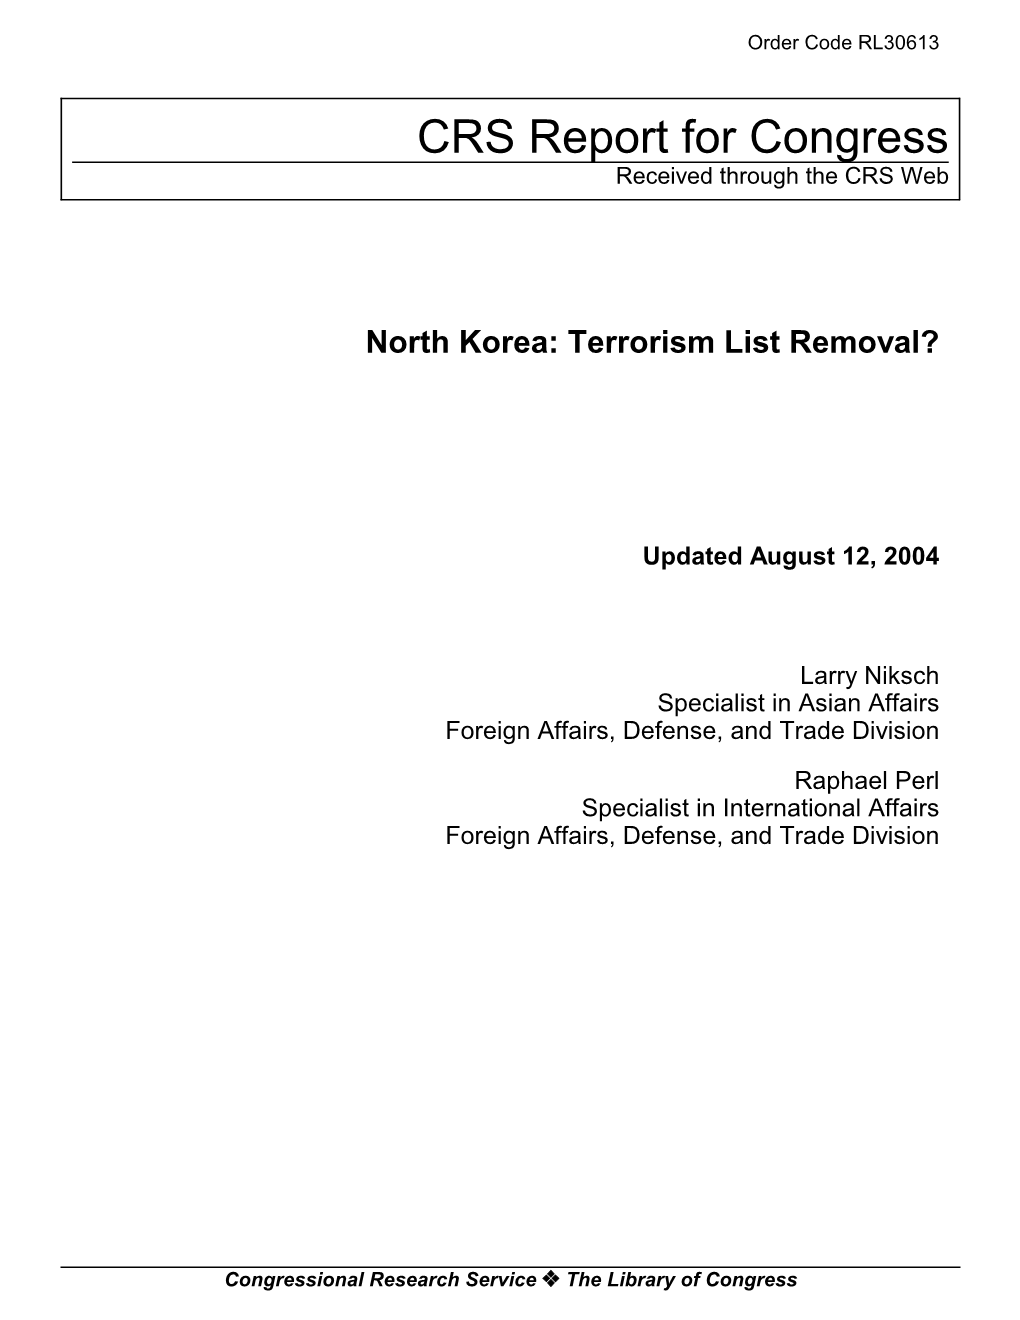 North Korea: Terrorism List Removal?